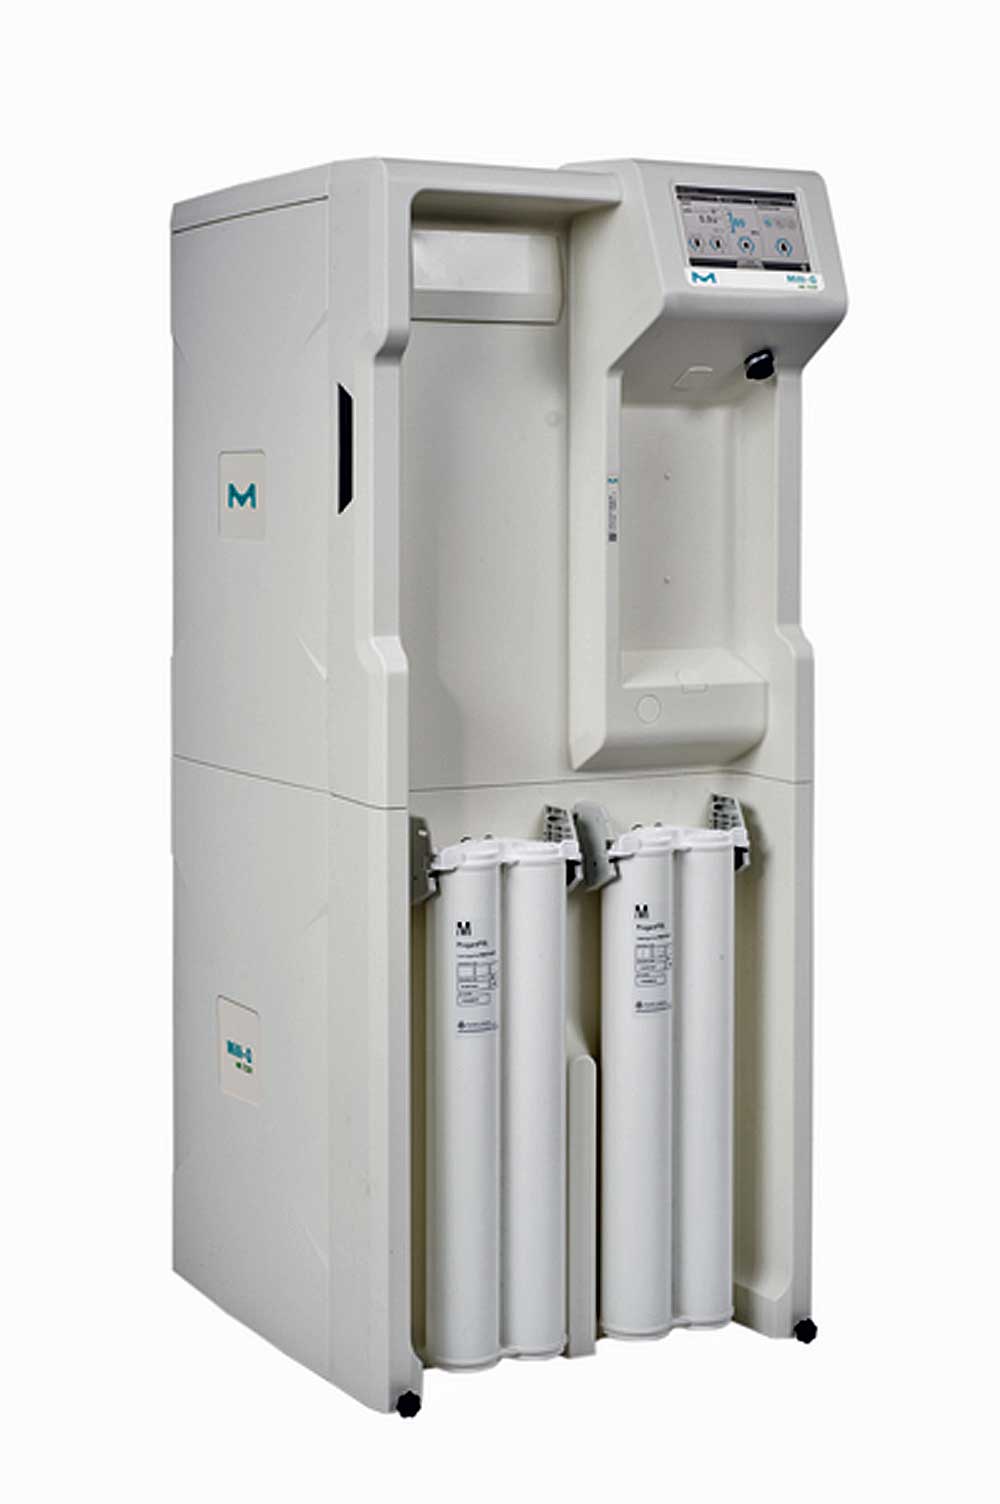 water sensors purification Milli-Q HR 7000 EMD Millipore